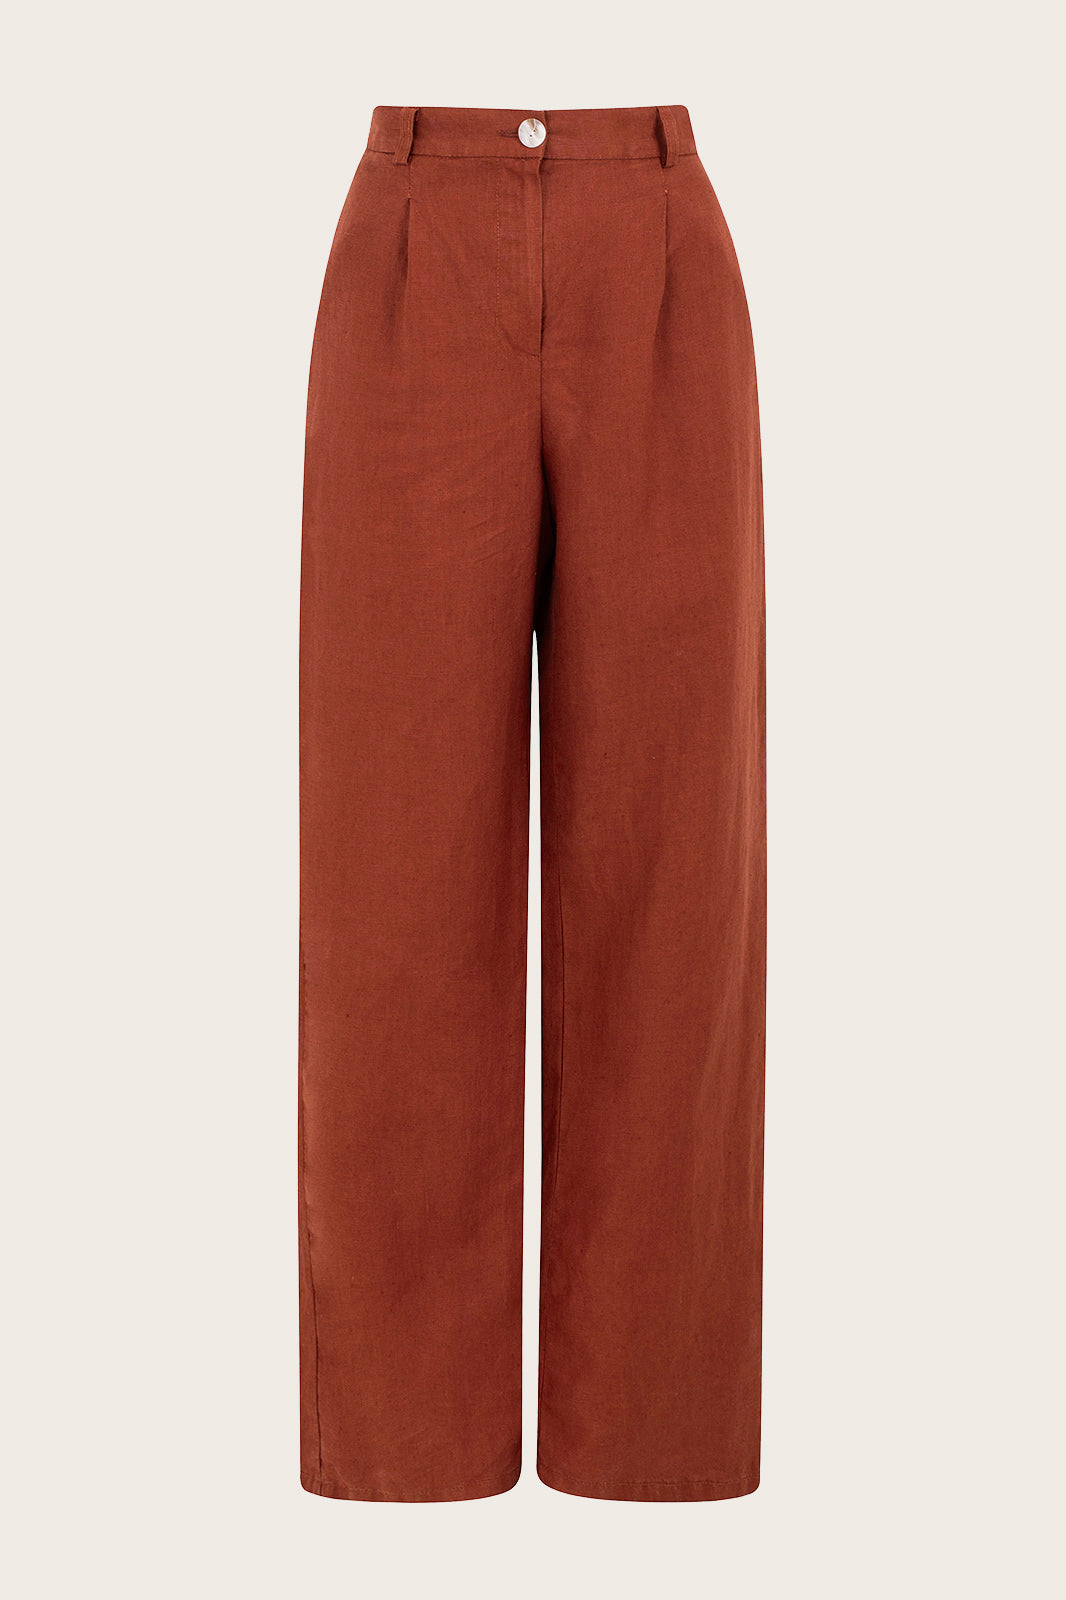 Naz women's high-waisted linen tailored pants in rust. 